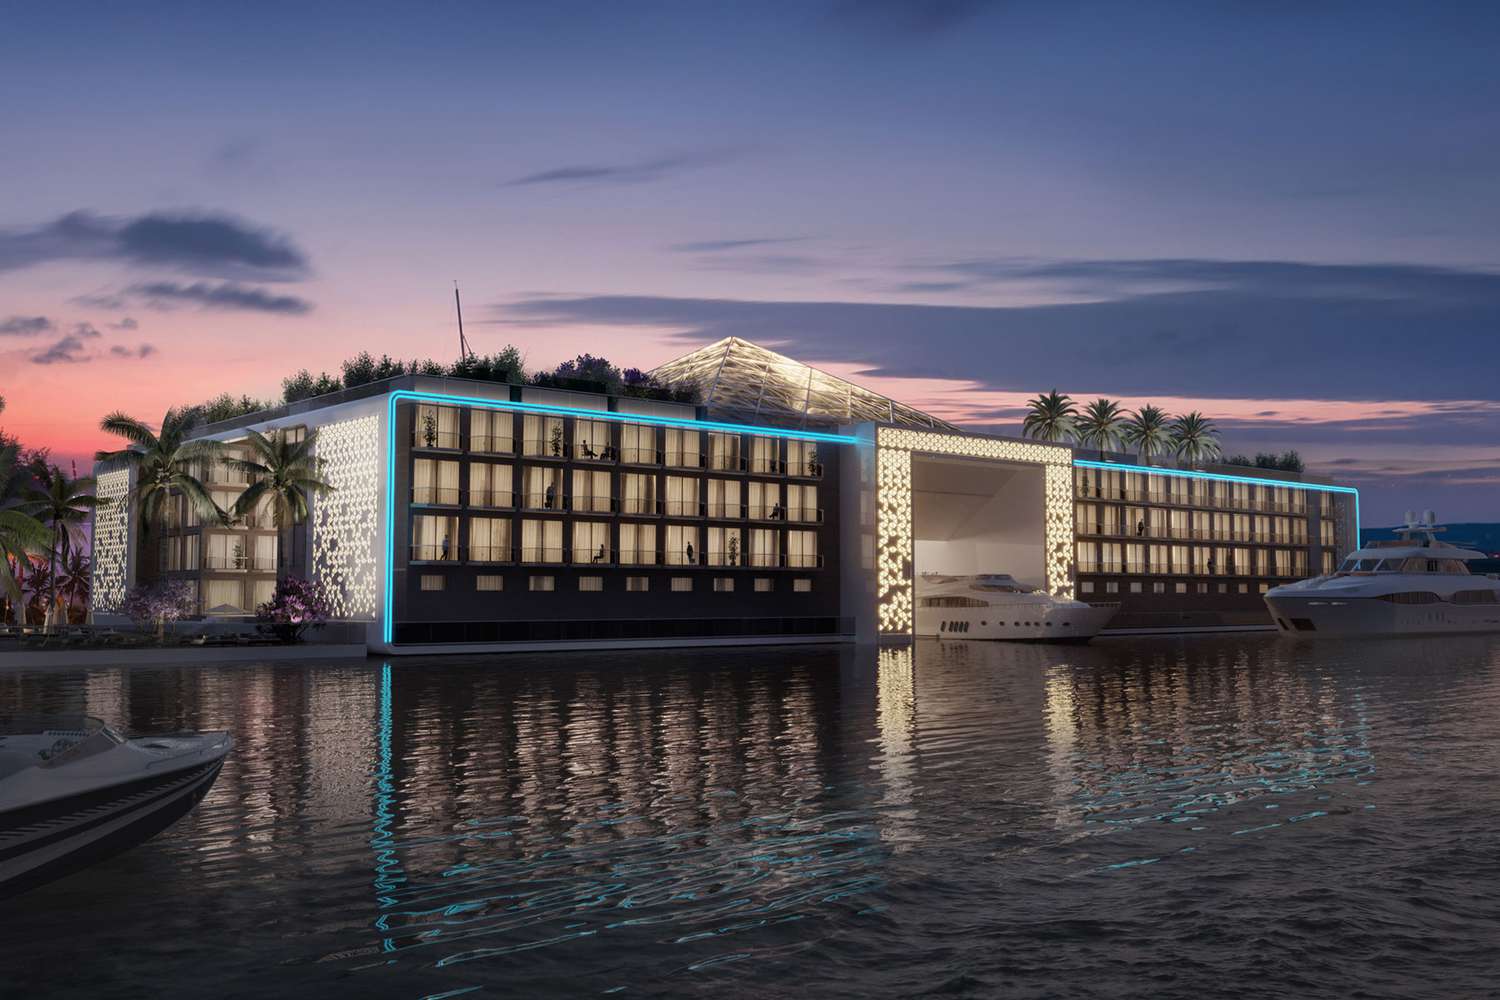 Kempinski latest hotels Dubai floating palace